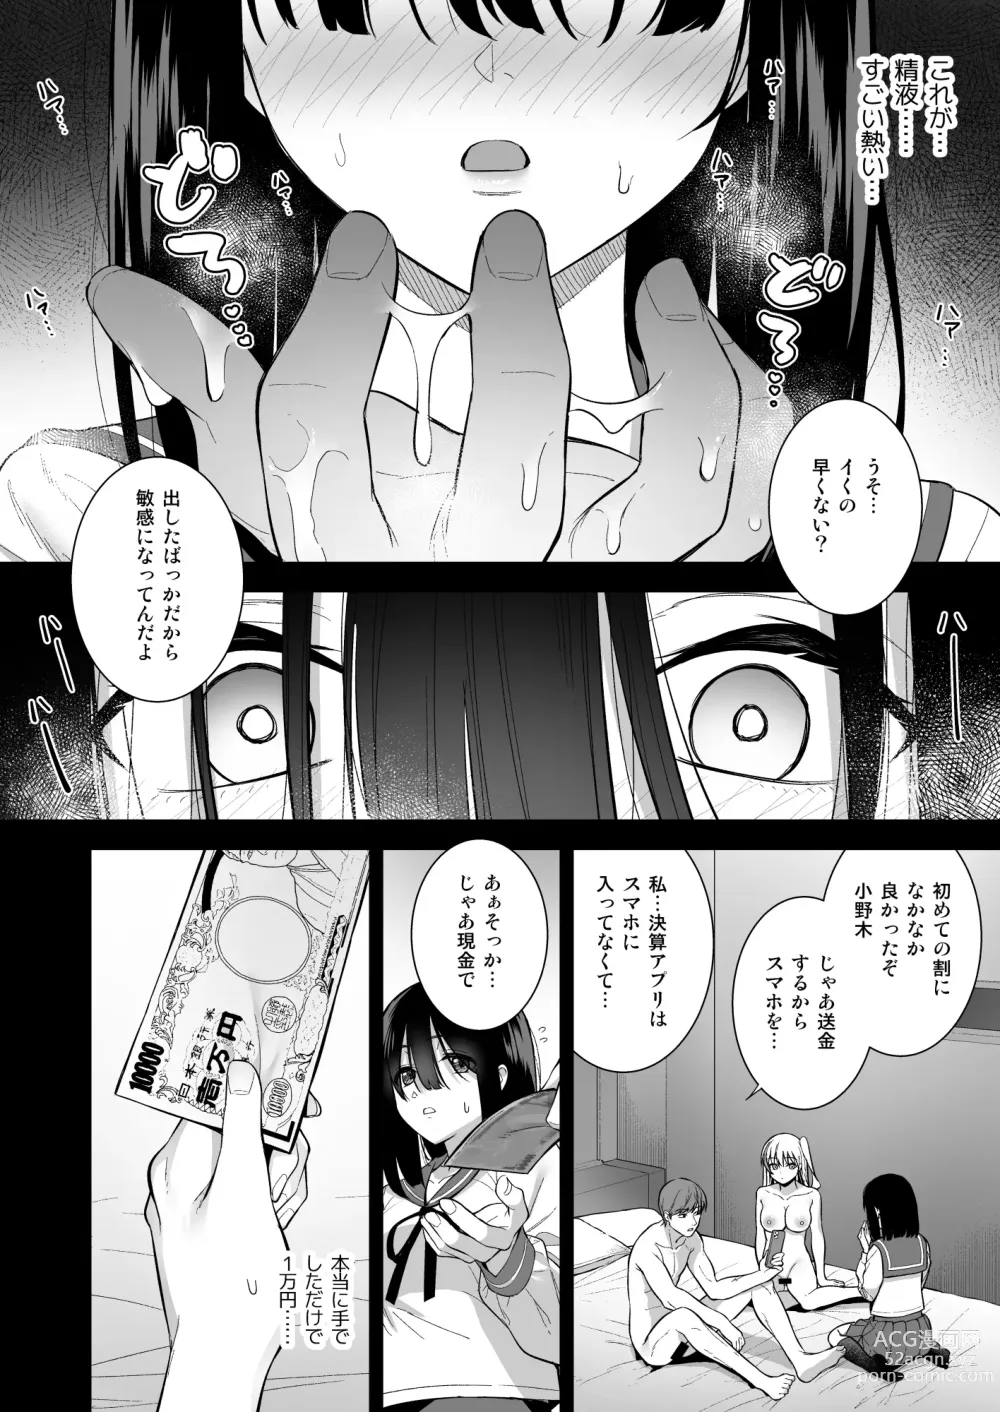 Page 15 of doujinshi Otonashii Onoki Mai wa Dawai shie Iku - Mai Onoki is Falling Down. Falling down.